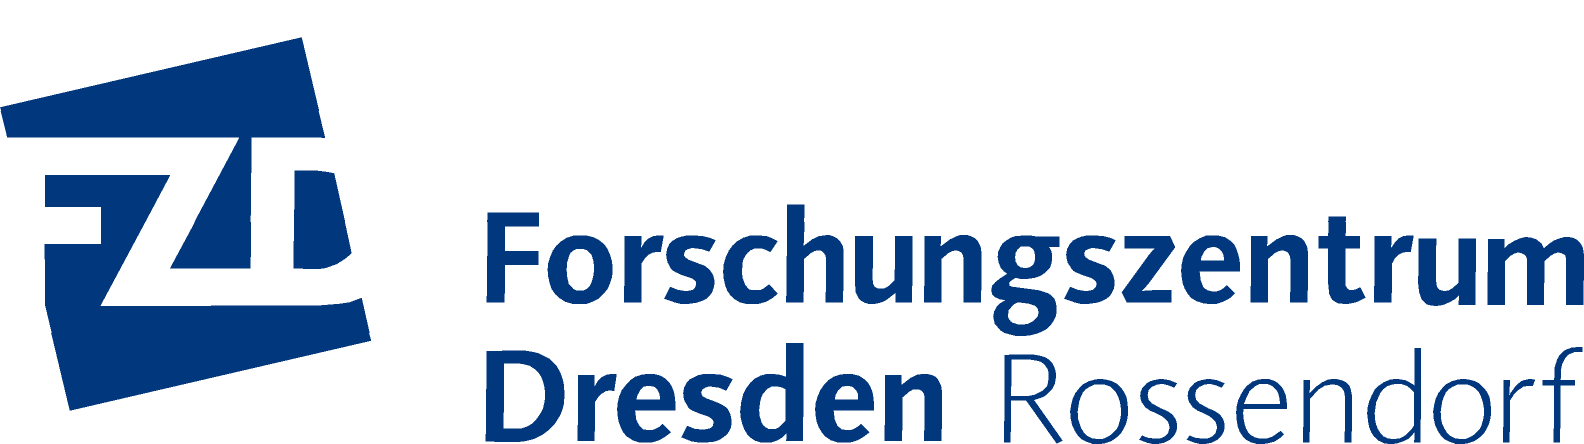 Logo FZD